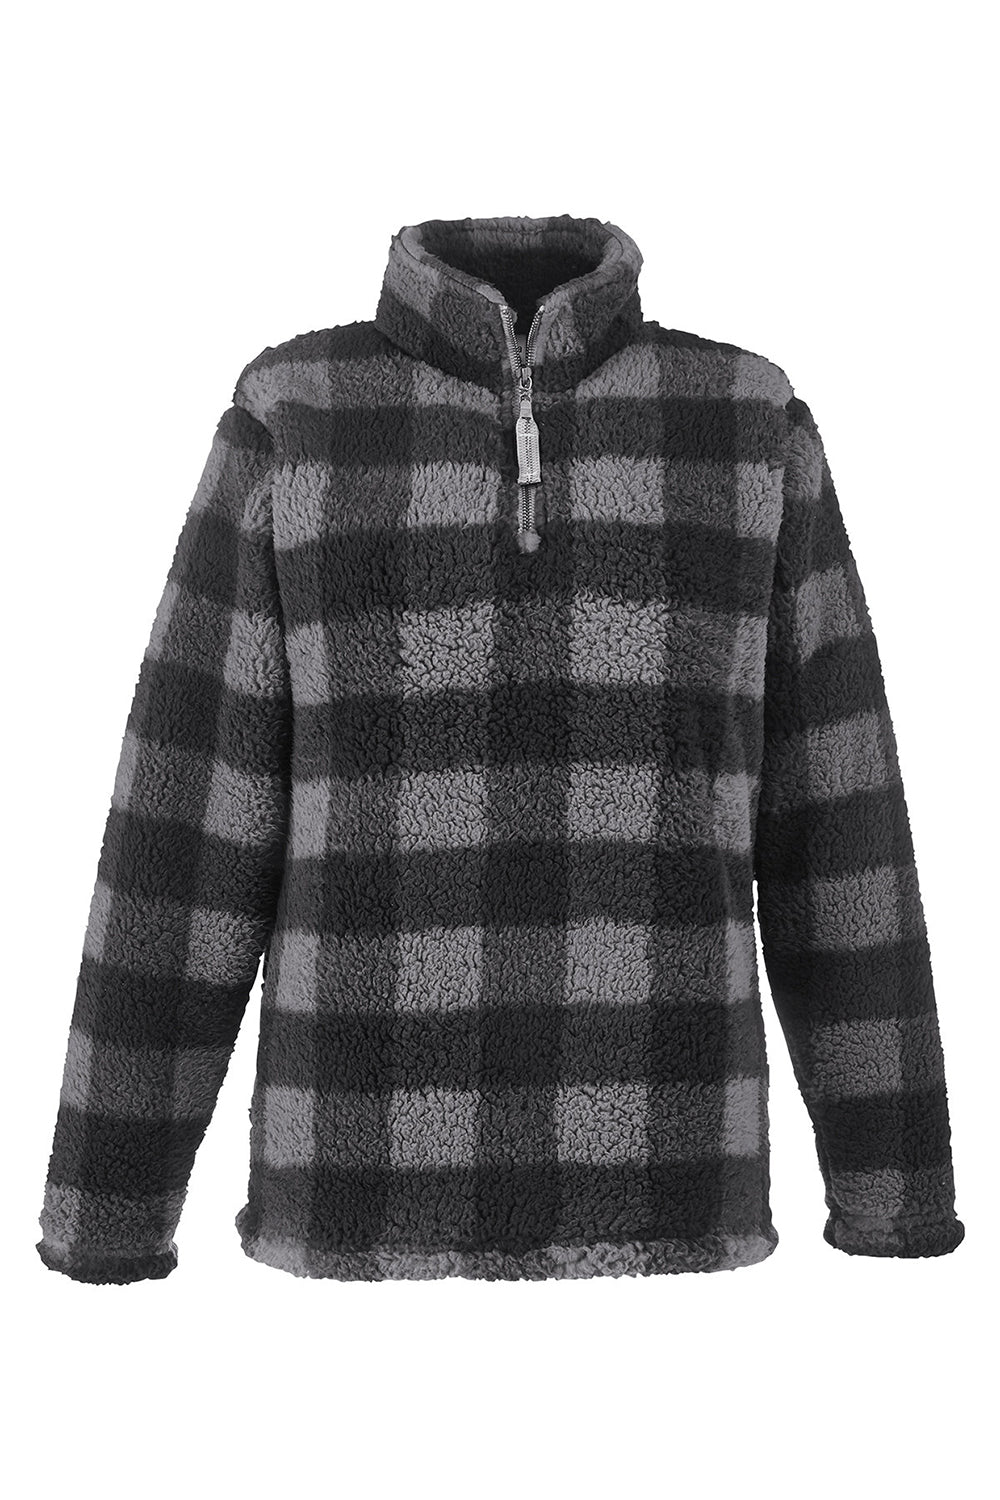 J America JA8451/8451 Womens Epic Sherpa Fleece 1/4 Zip Sweatshirt Black/Charcoal Grey Flat Front